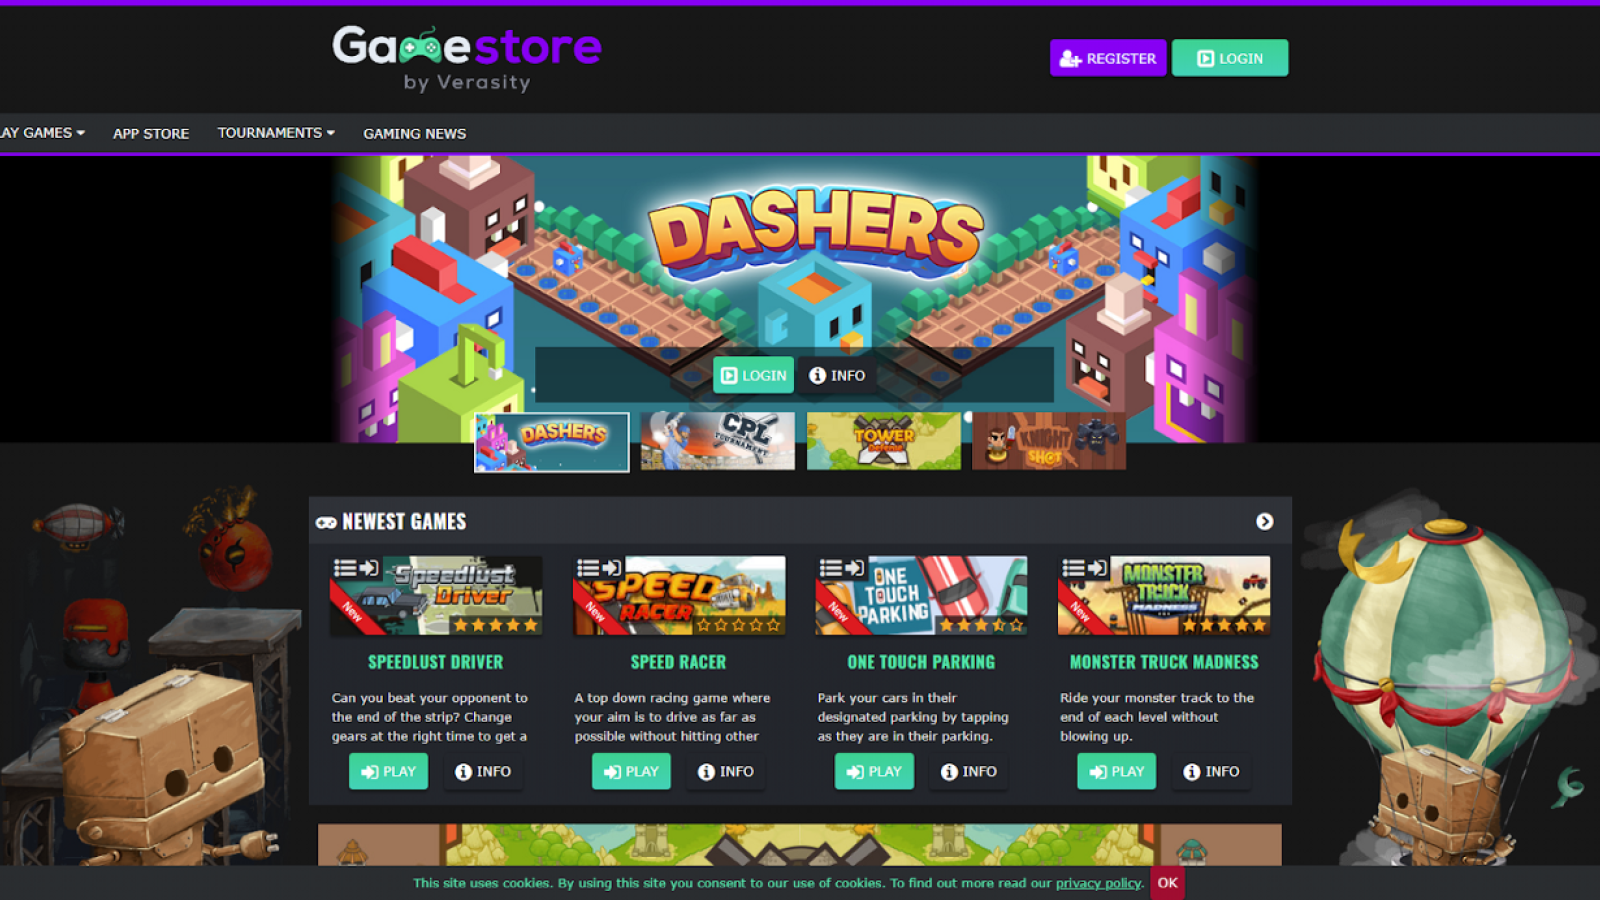 Verasity GameStore